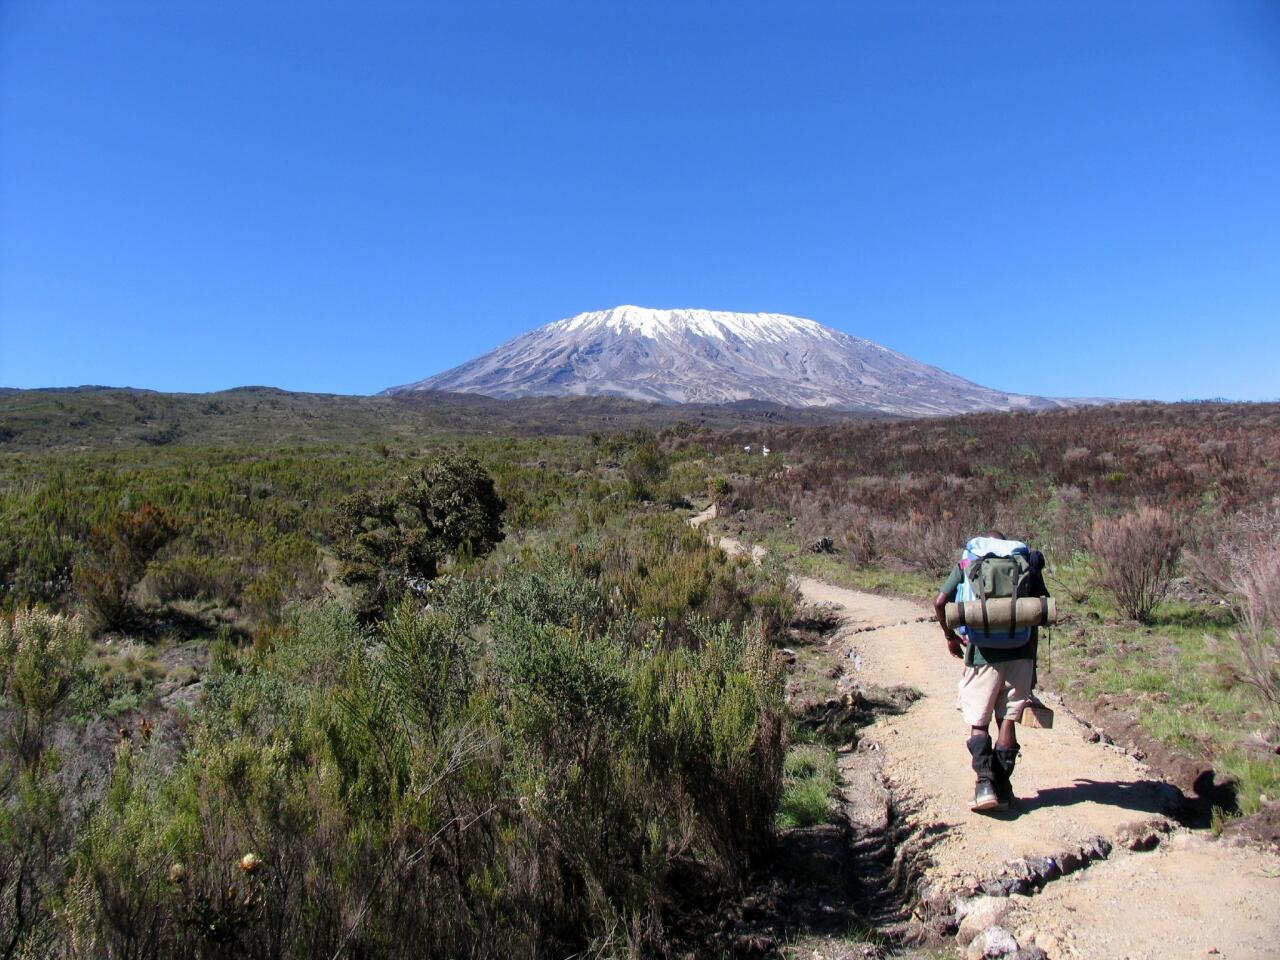 Mount Kilimanjaro in Africa